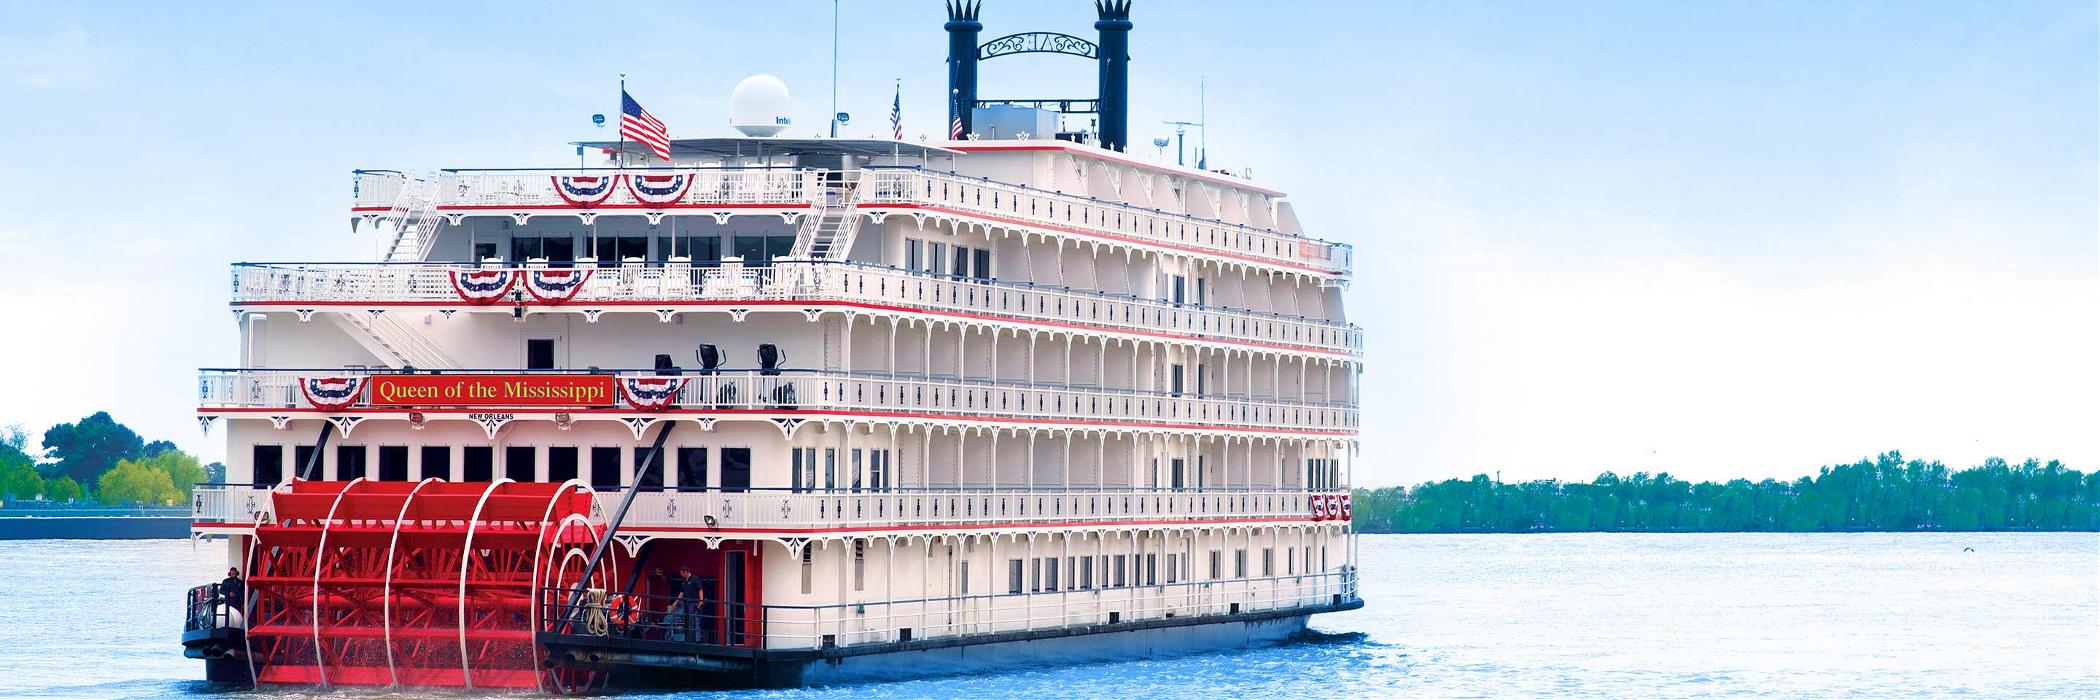 Mississippi River Cruise 2020 Kosher River Cruise